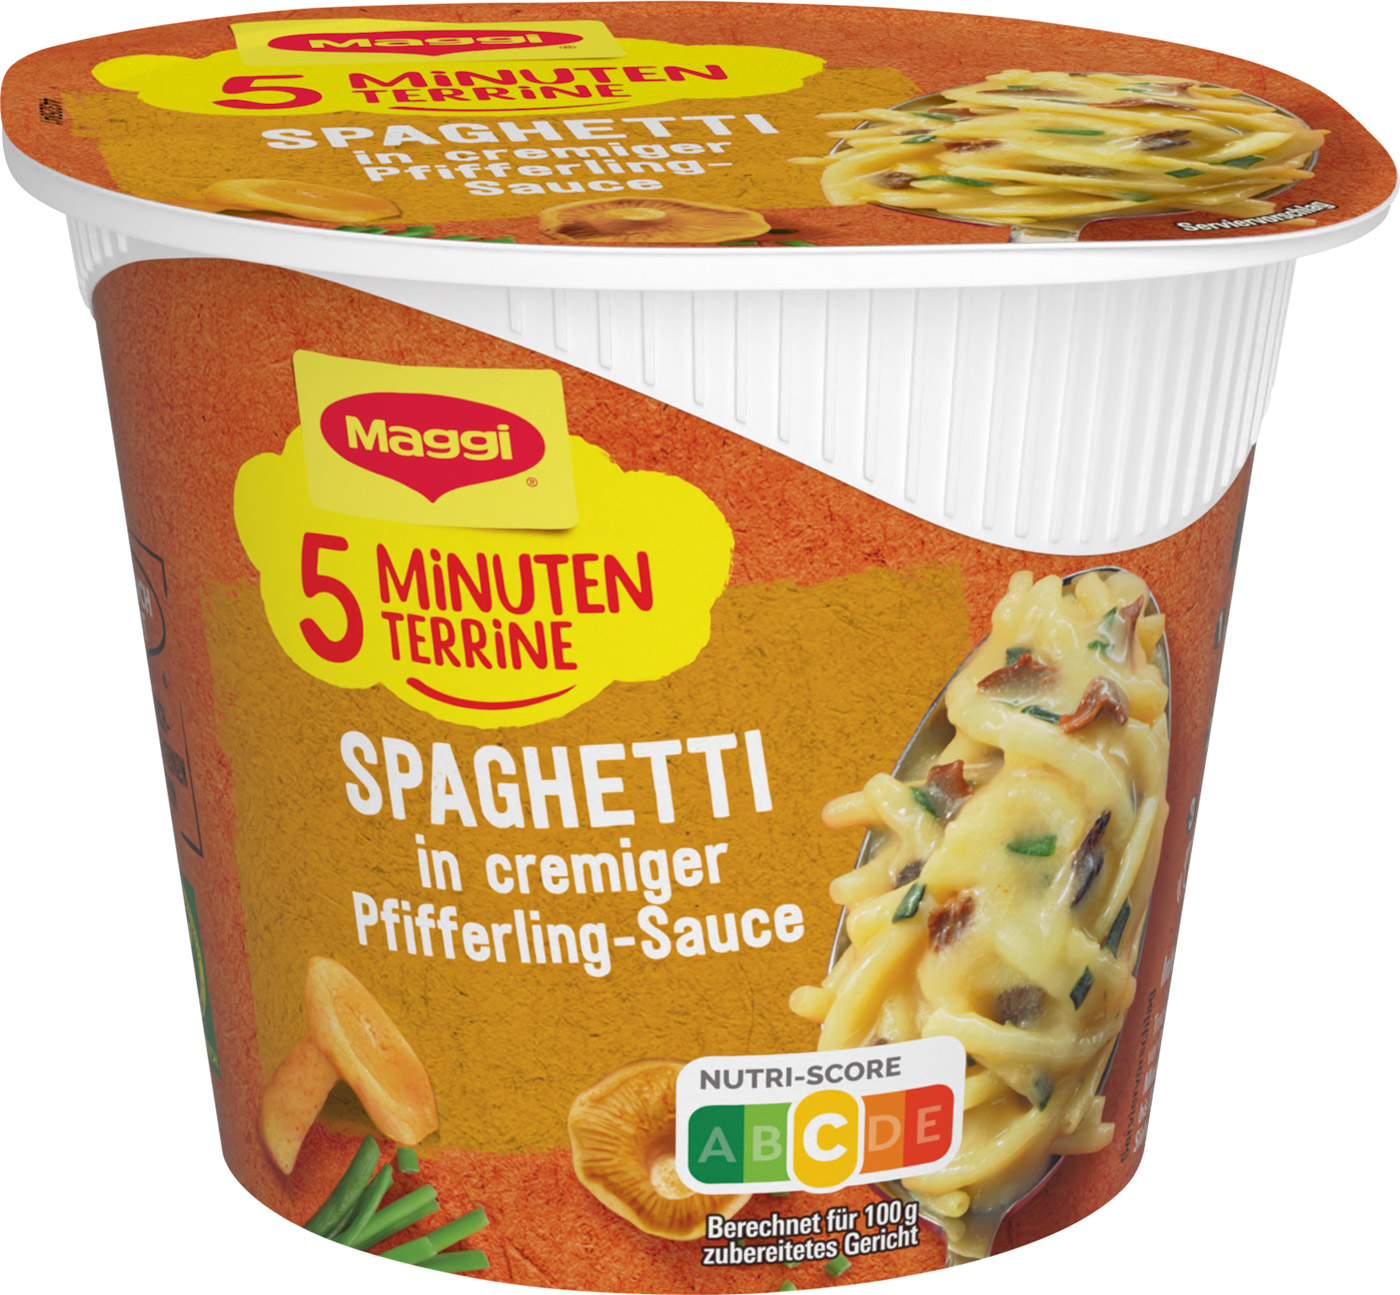 Maggi 5 Min Terrine Spaghetti in Pfifferling Rahm 54G